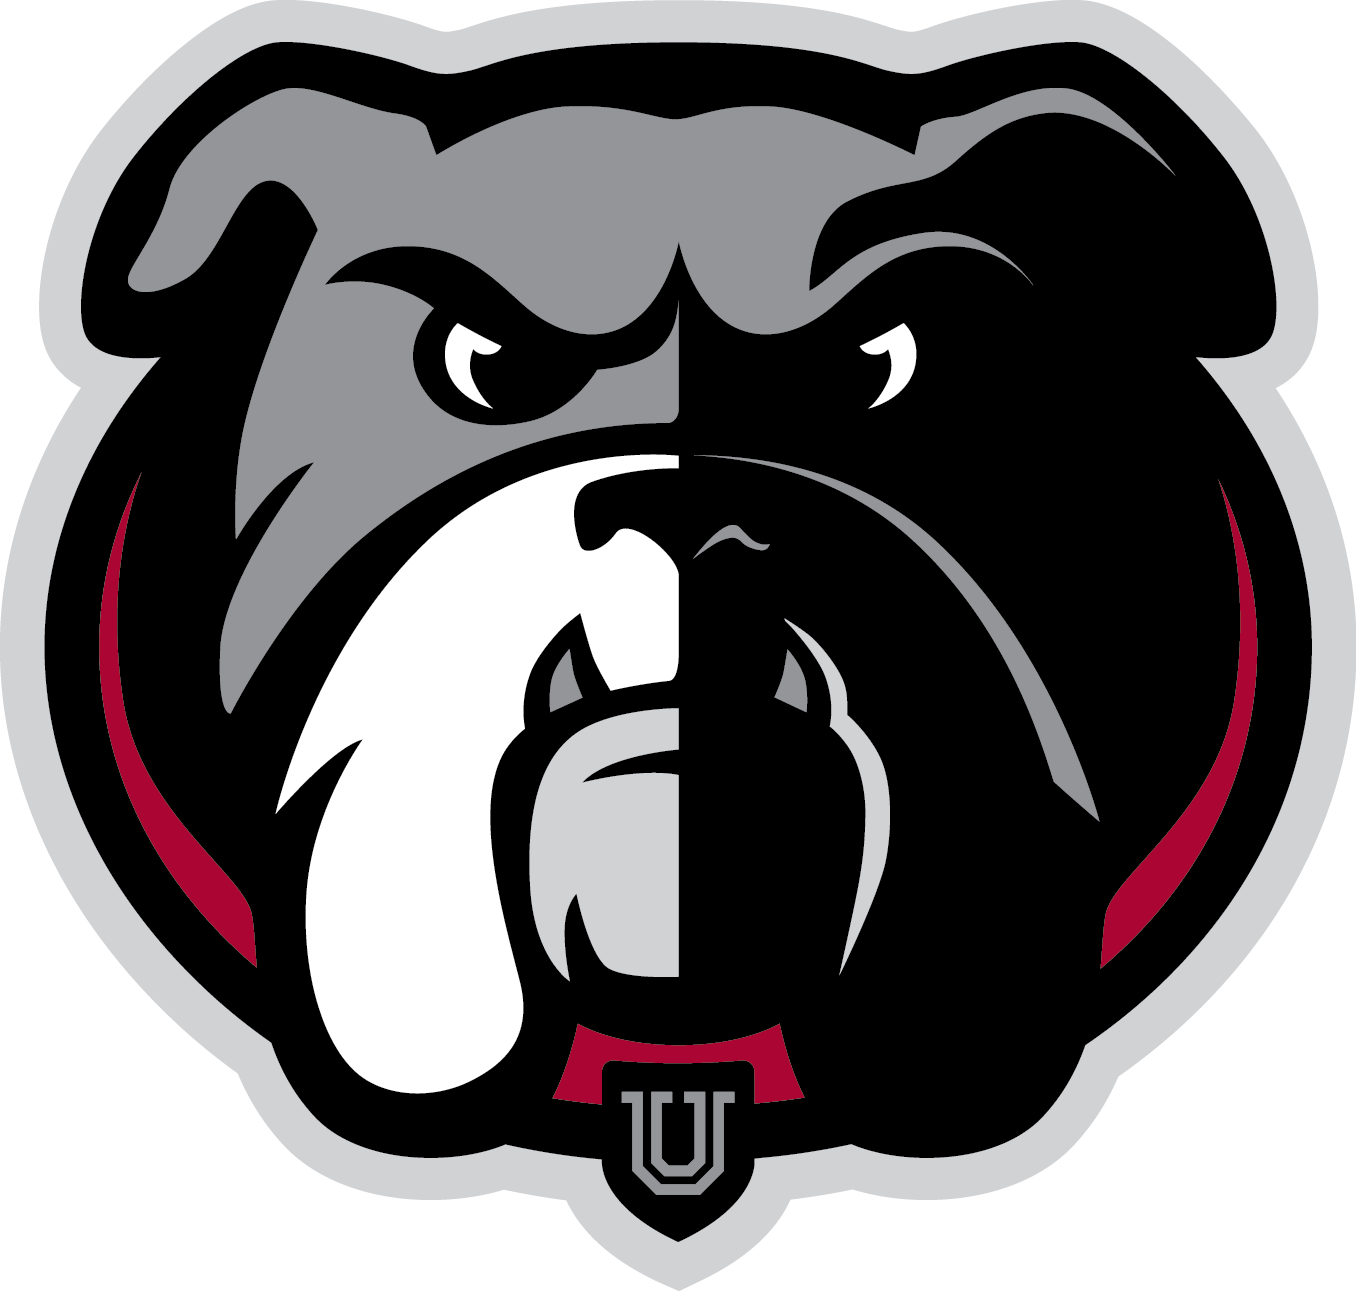 Downloads, Branding Style Guide At Union University - Union University Bulldogs (1356x1291)